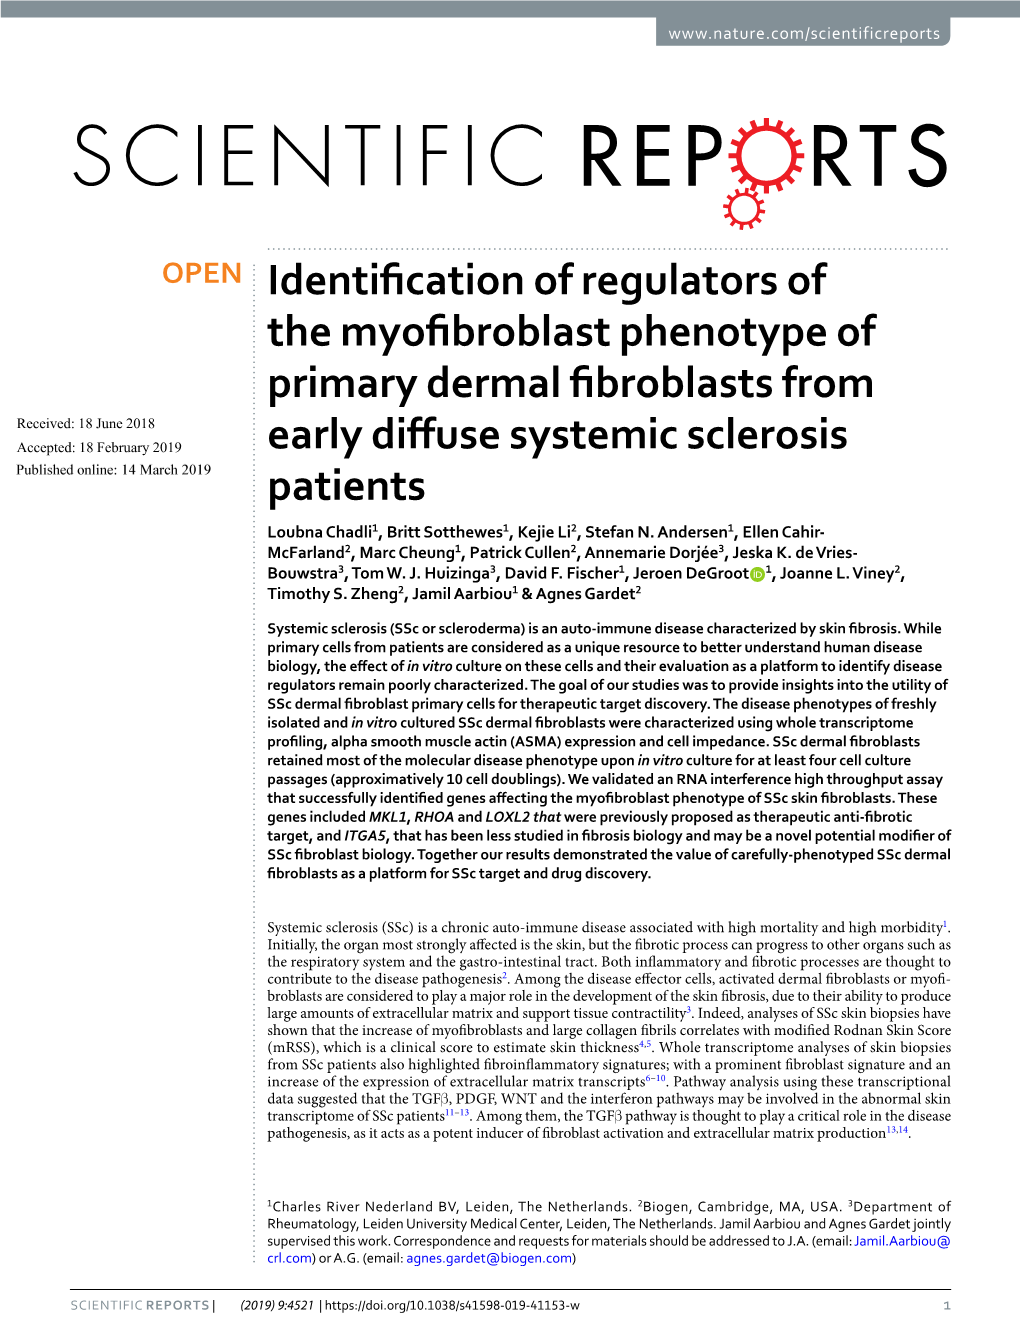 Identification of Regulators of the Myofibroblast Phenotype of Primary